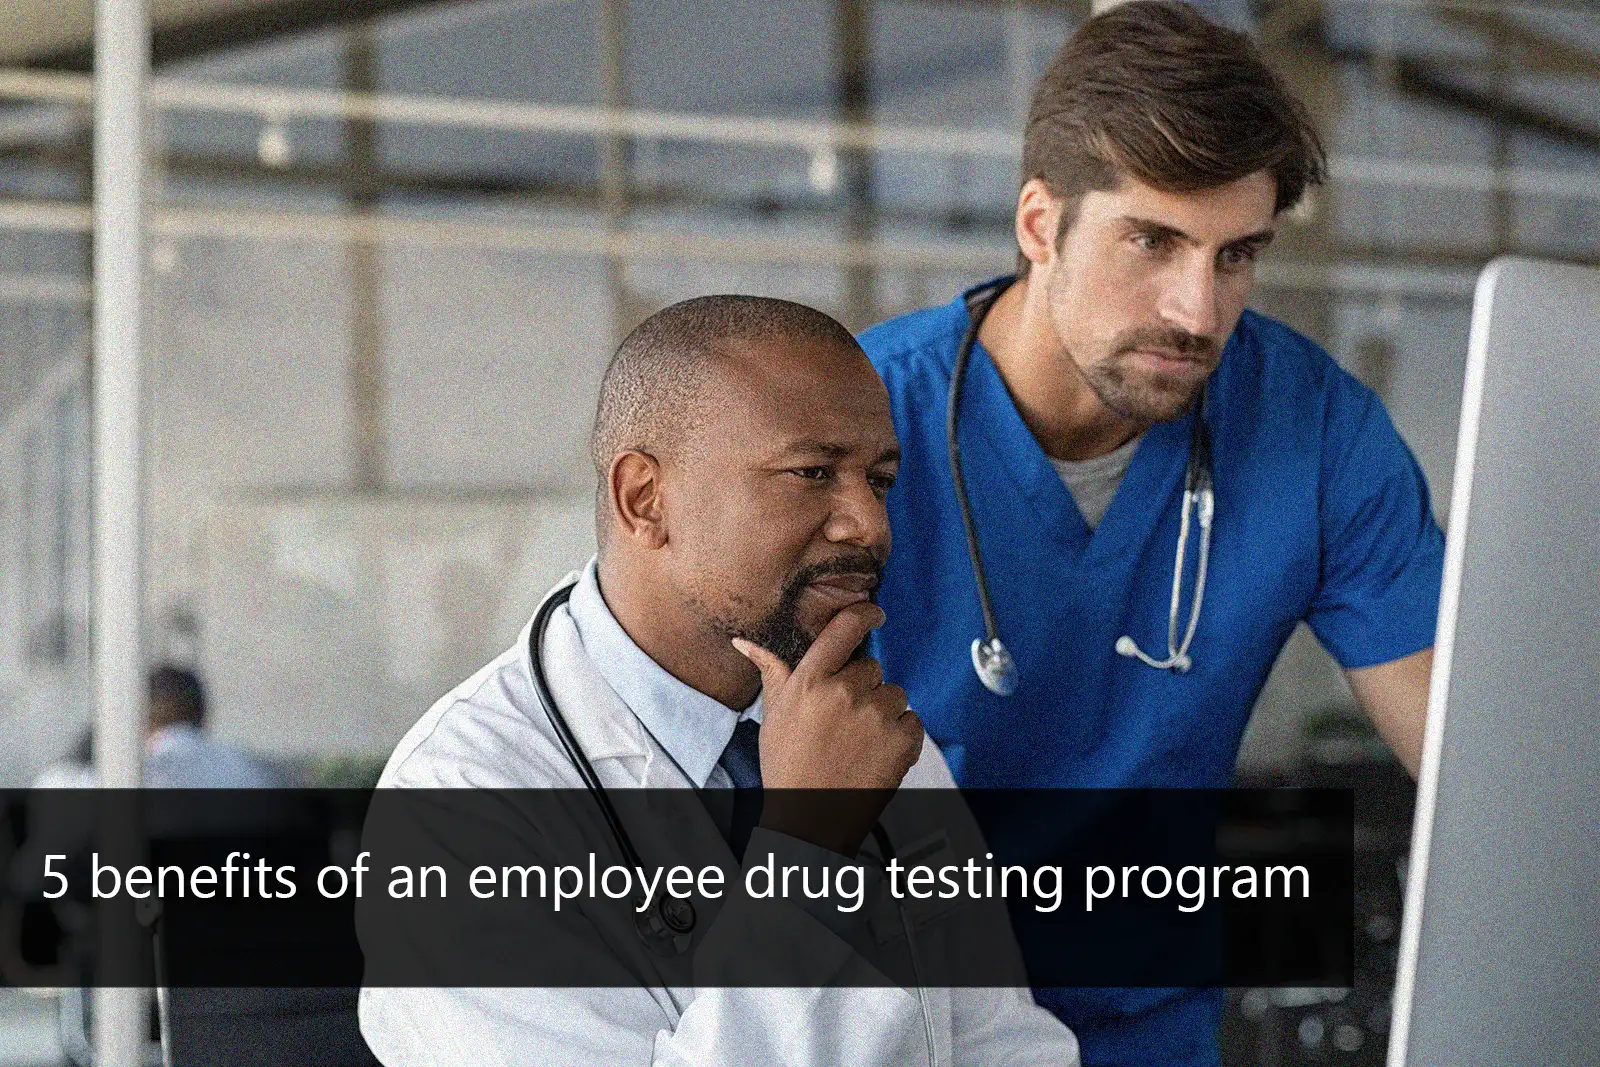 5 benefits of an employee drug testing program